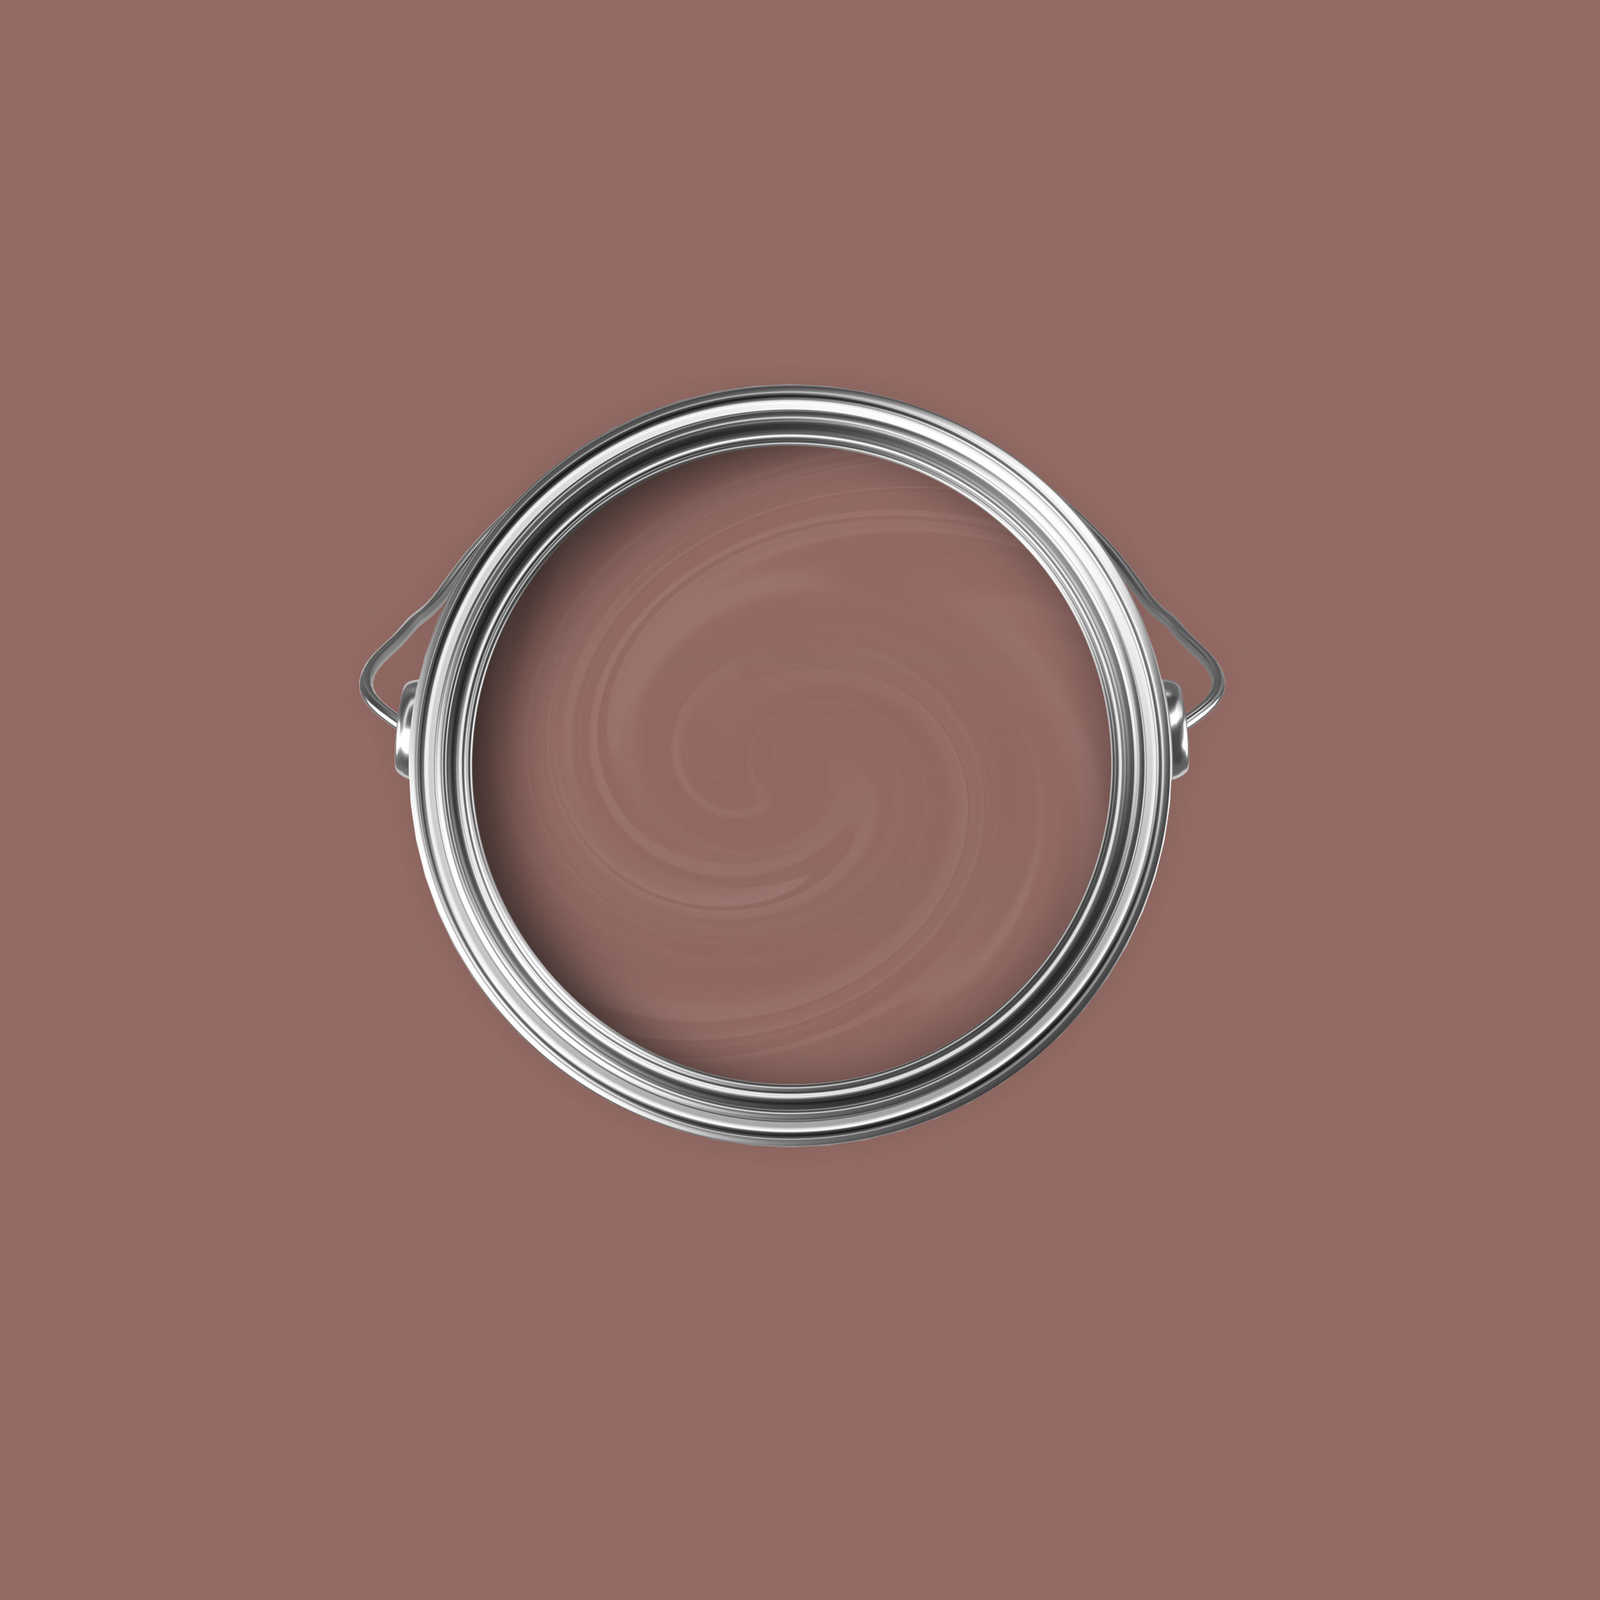             Premium Muurverf Naturel Donker Roze »Natural Nude« NW1012 – 2,5 Liter
        